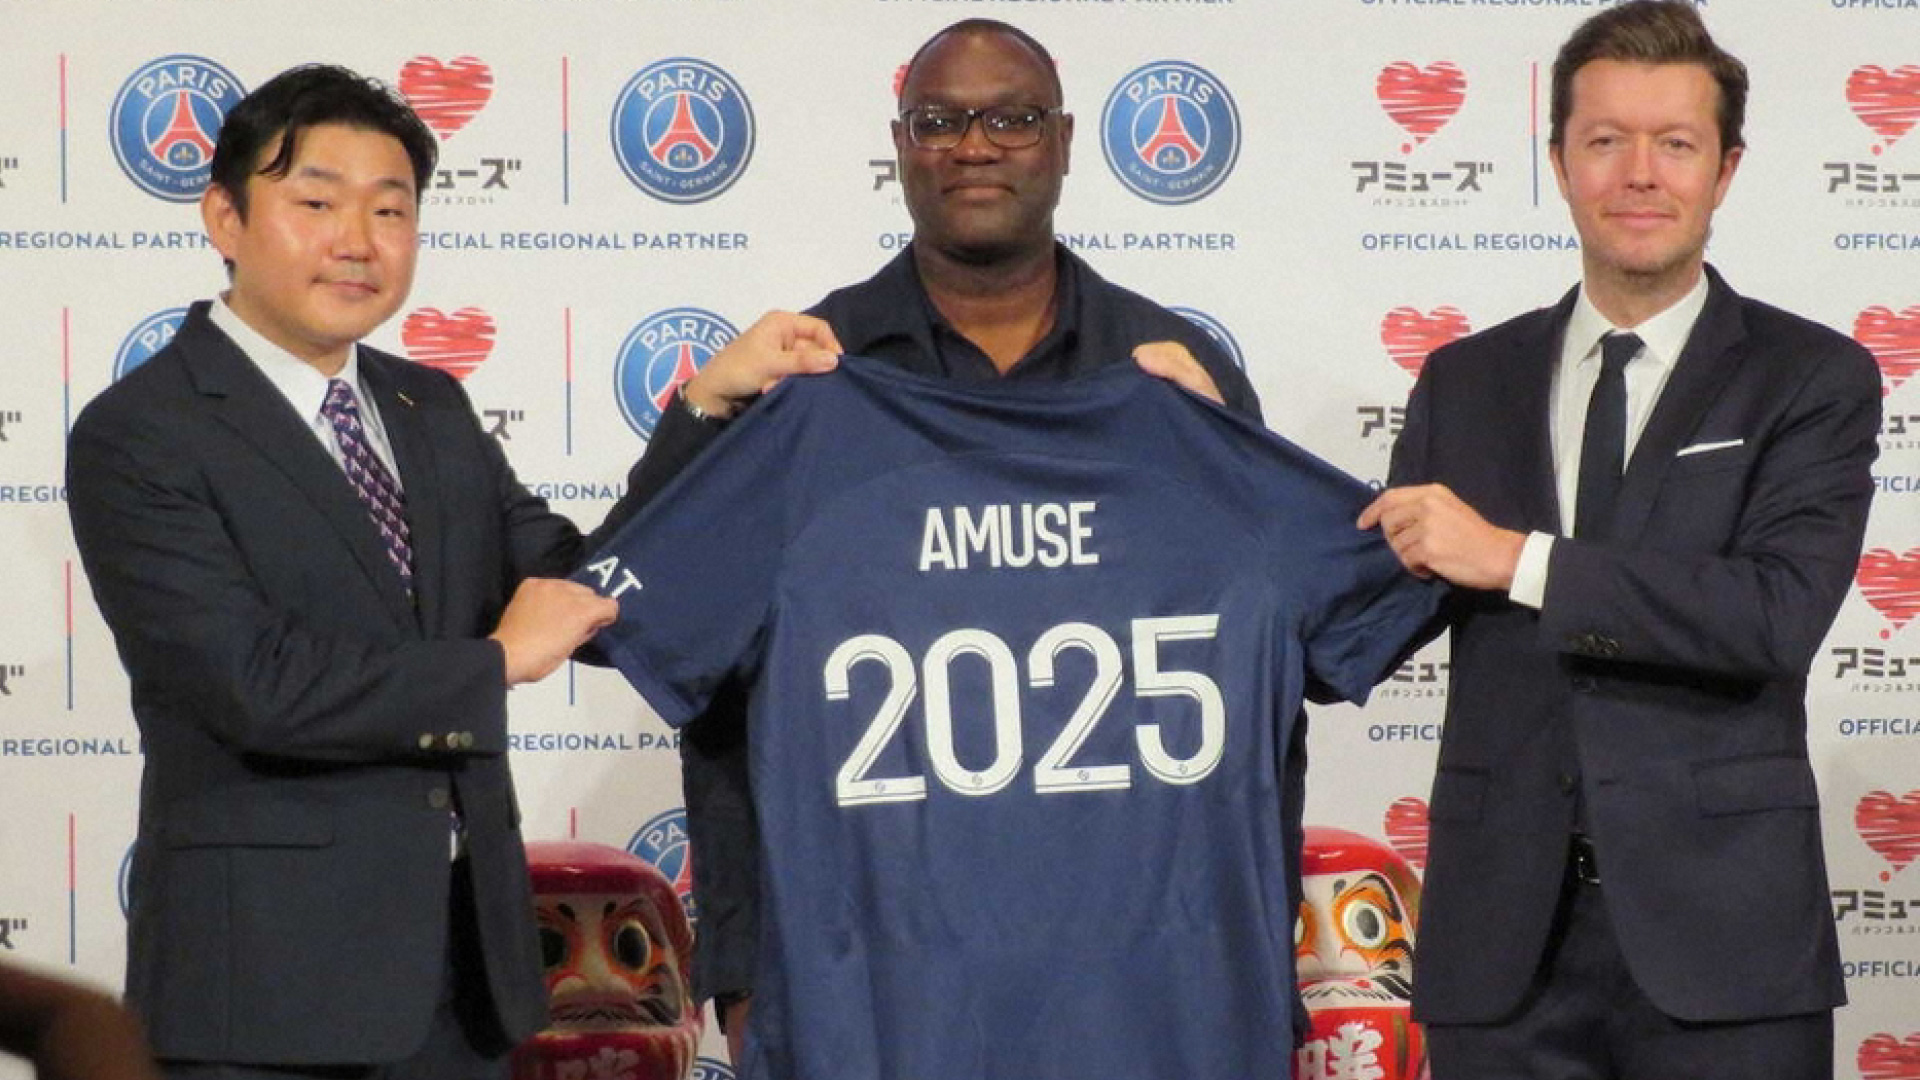 PSGとアミューズの公式リージョナルパートナー 契約締結会見が27日に都内で行われました。